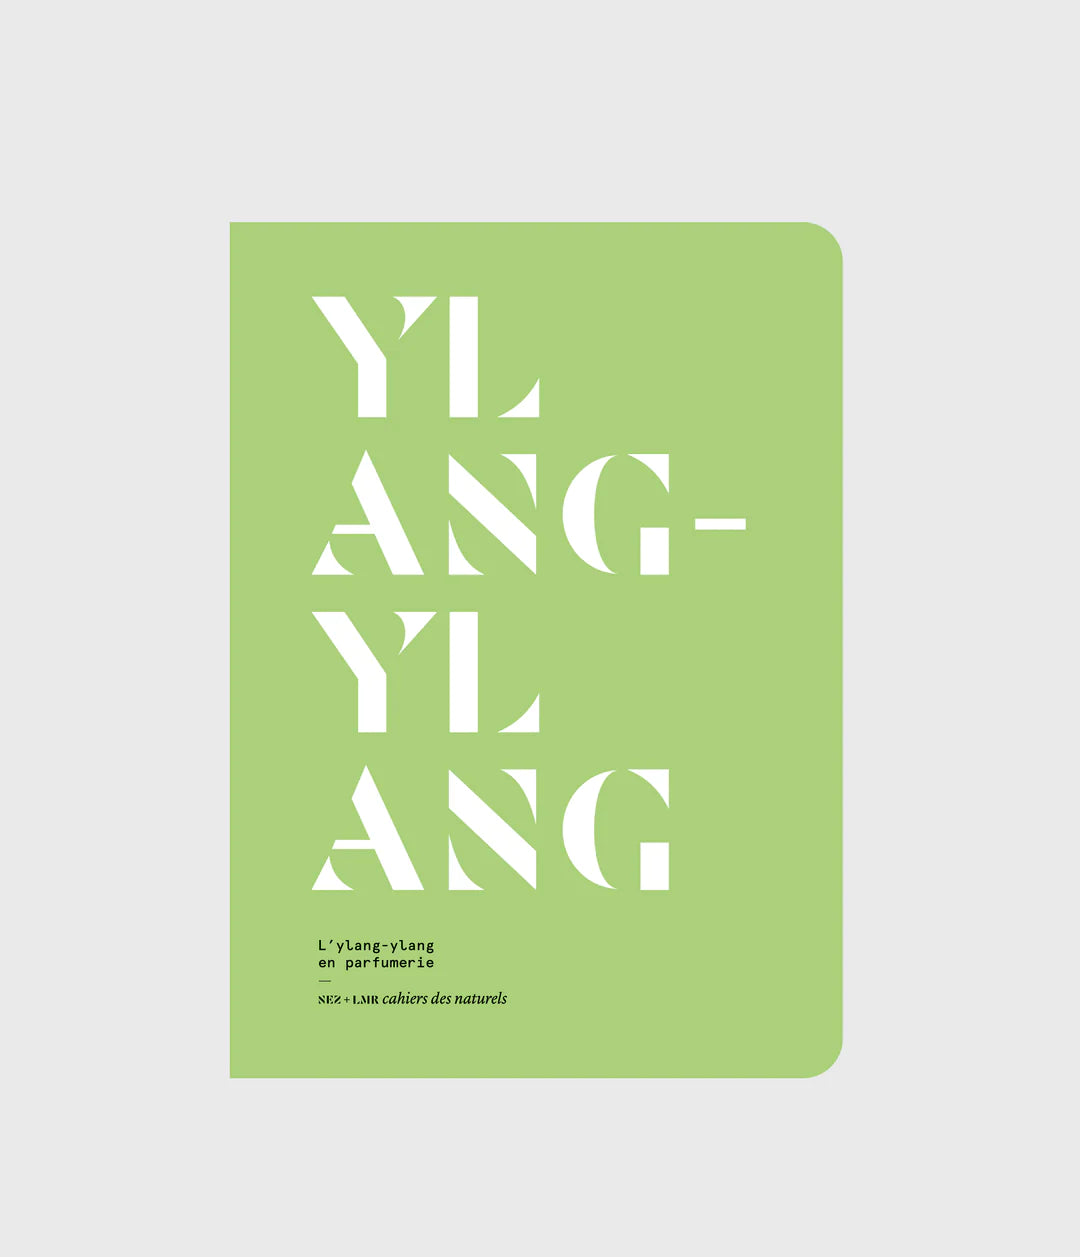 Cahiers des naturels, L'ylang-ylang en parfumerie